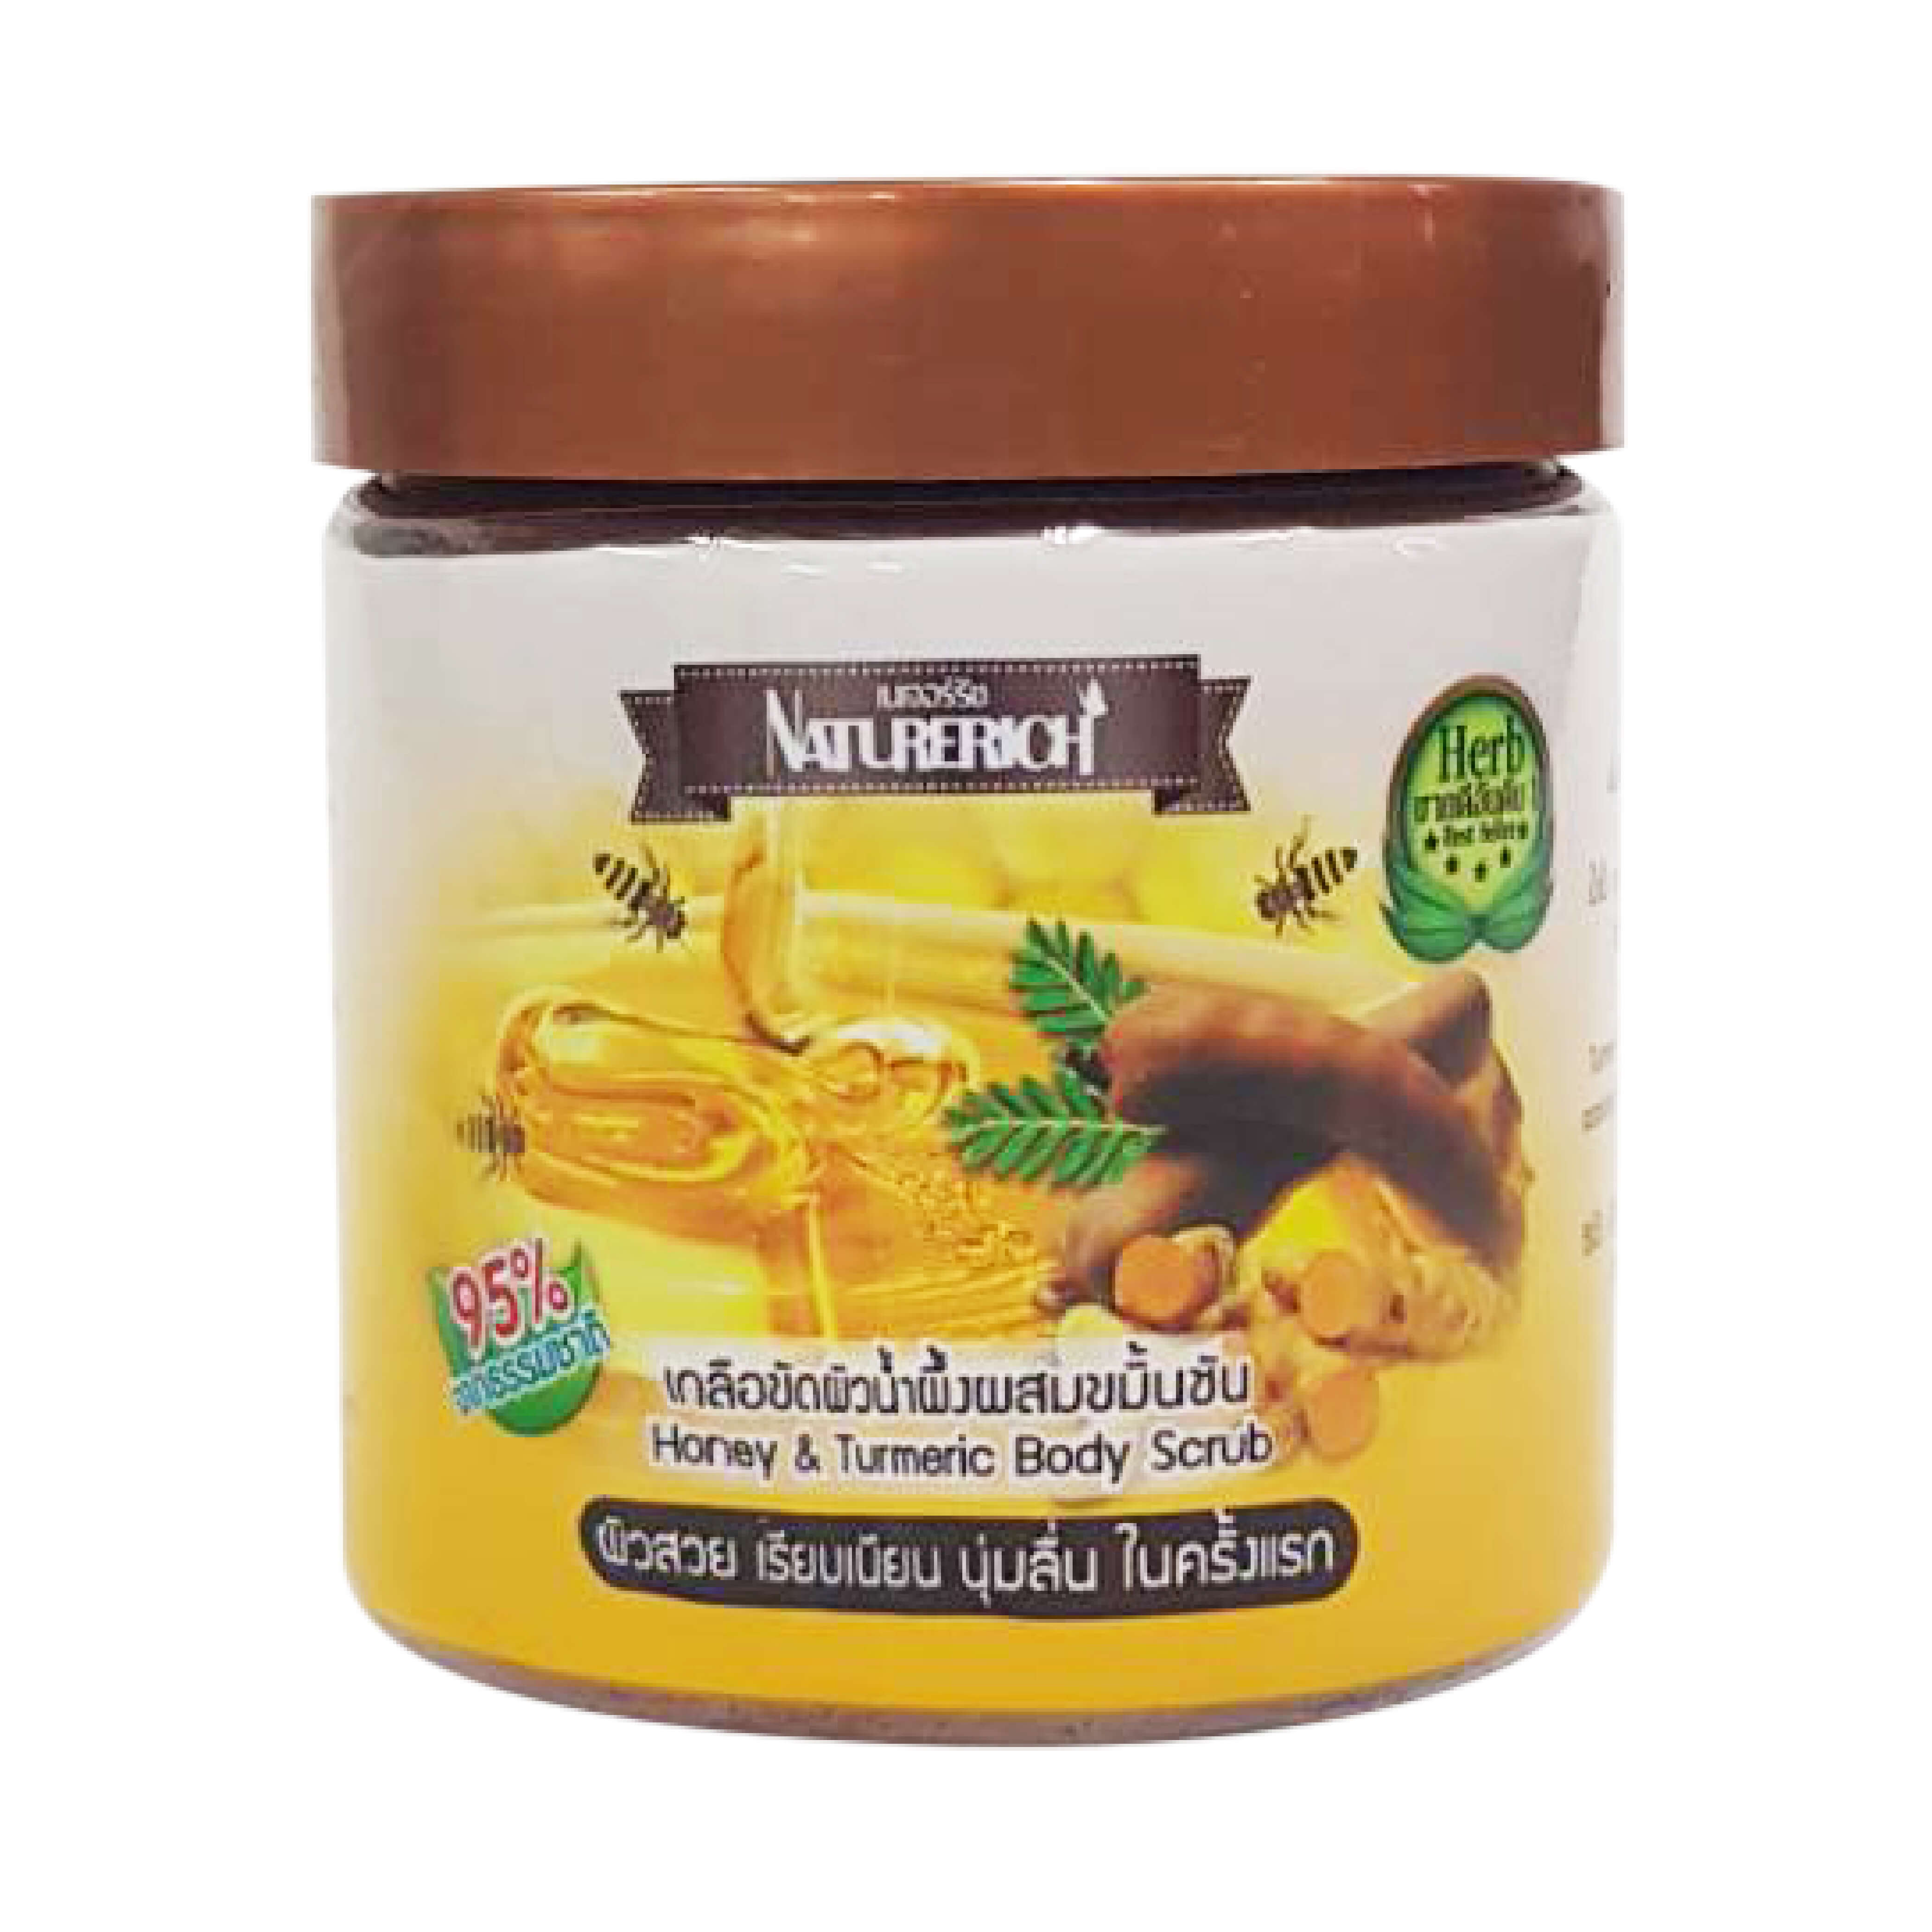 Naturerich Honey And Turmeric Body Scrub 250g C R S T Trading Co Ltd